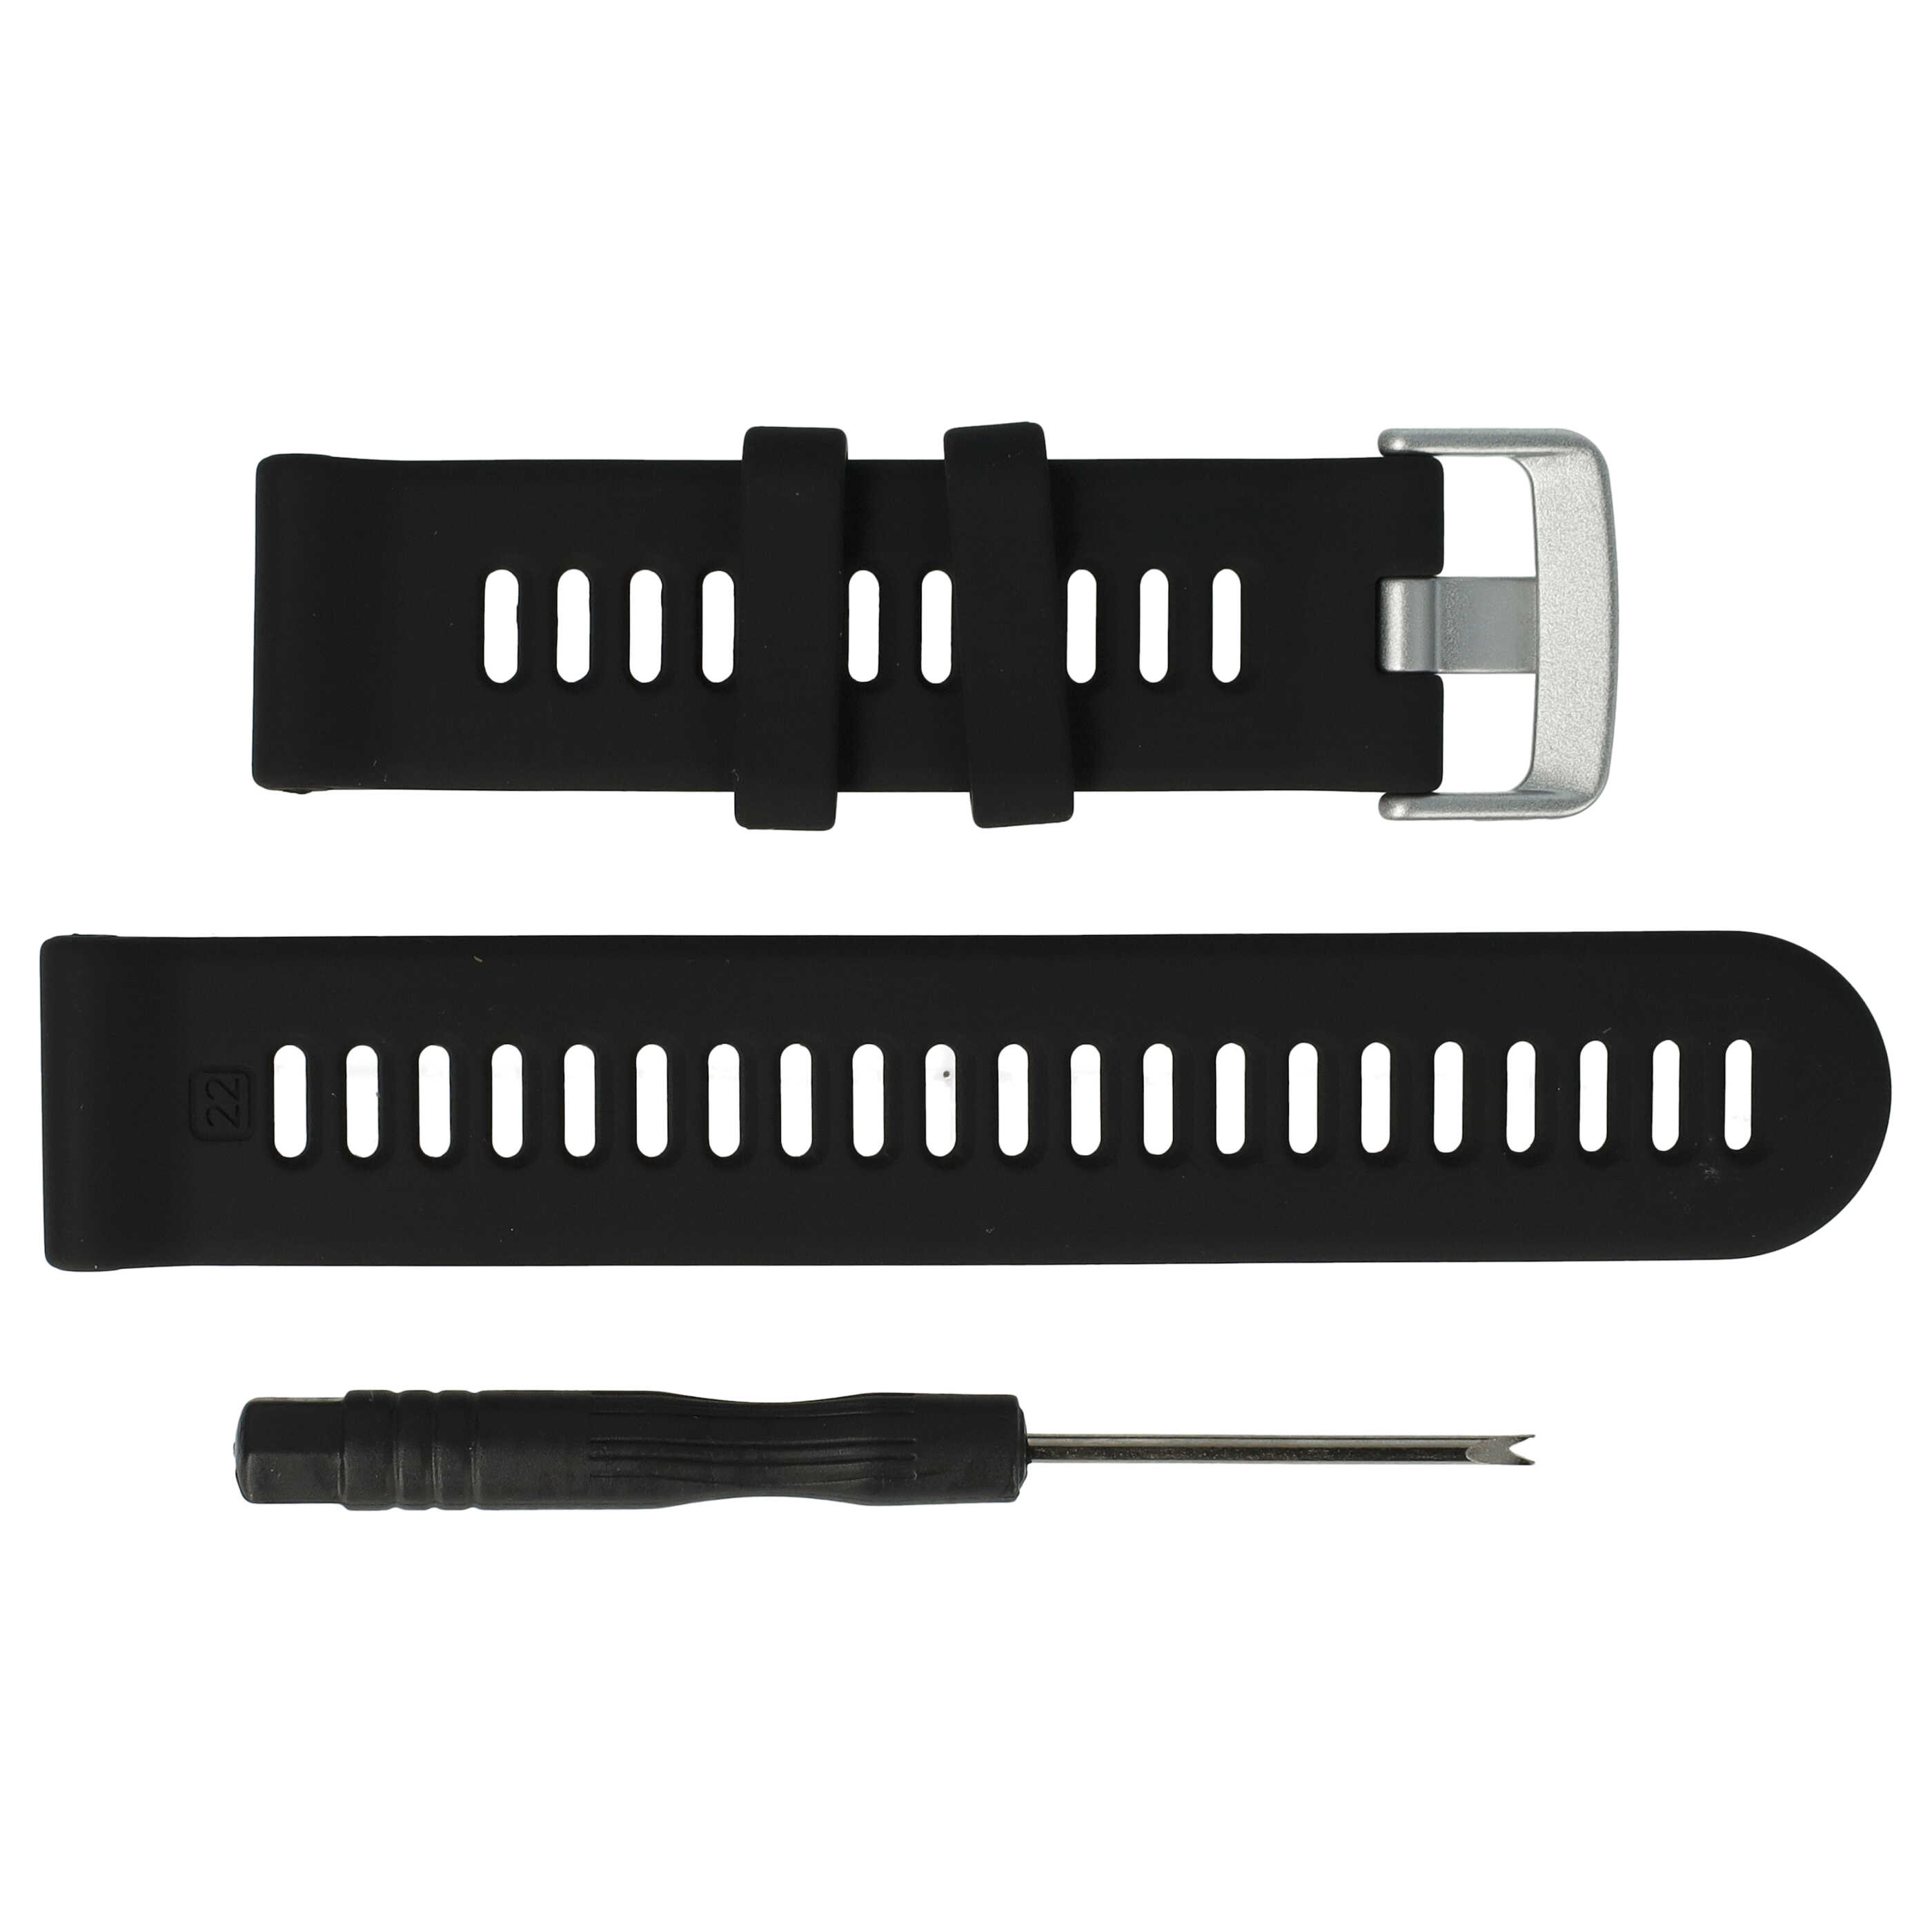 Pasek do smartwatch Garmin Forerunner - dł. 9 + 12,2 cm, szer. 22 mm, silikon, czarny